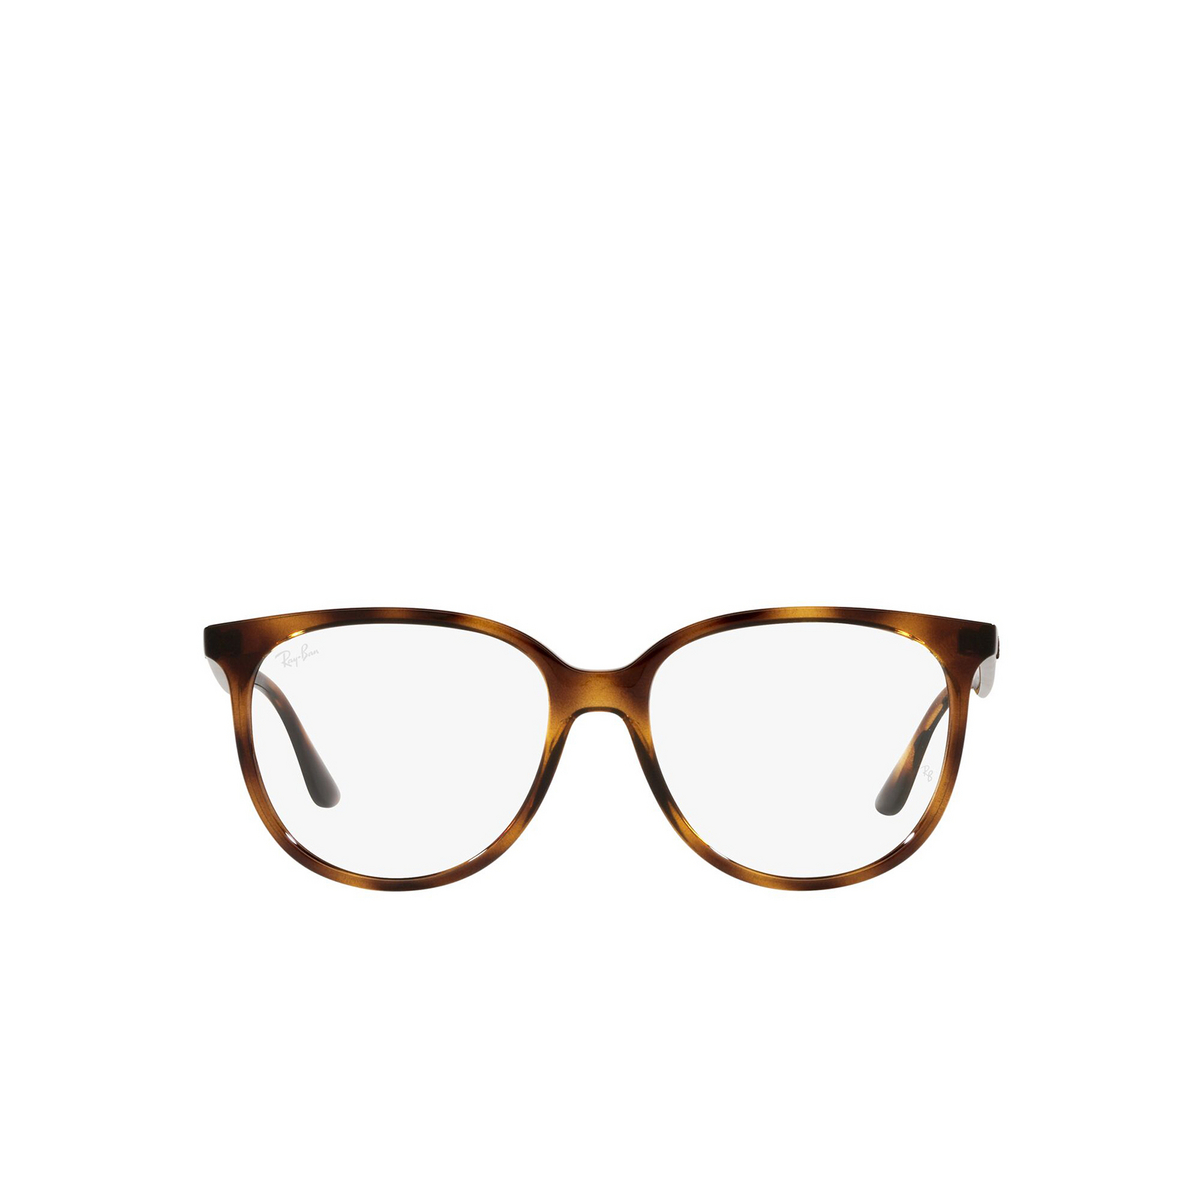 Ray-Ban® Square Eyeglasses: RX4378V color Havana 2012 - front view.